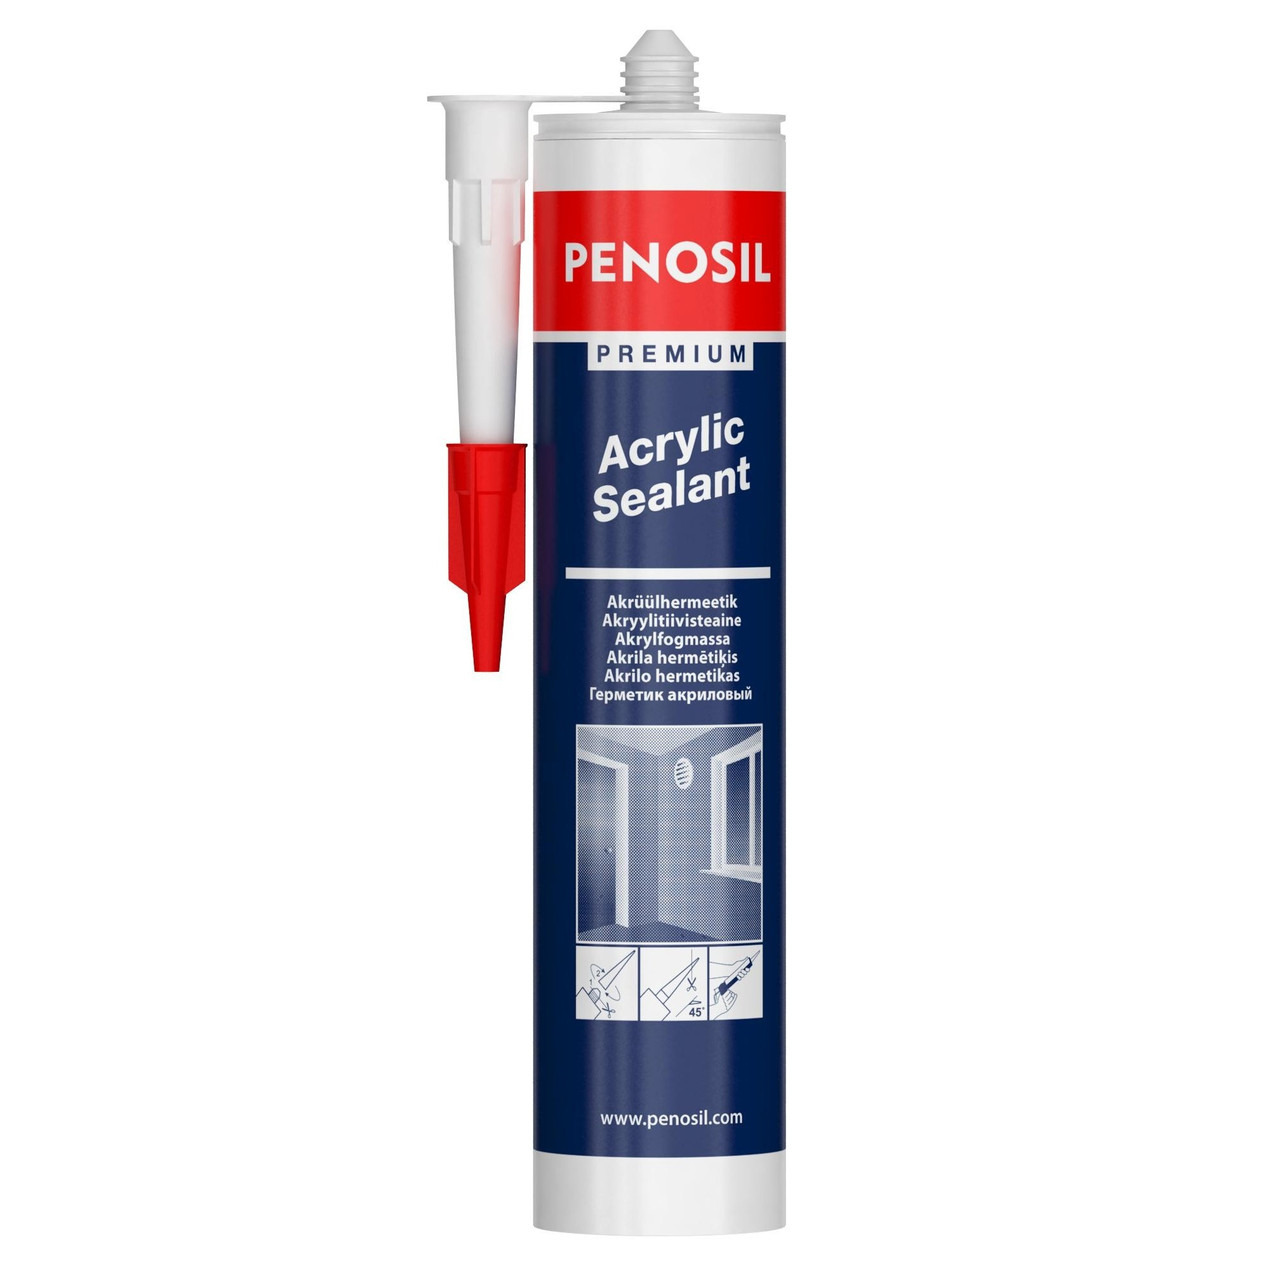 PENOSIL Premium Acrylic Sealant герметик